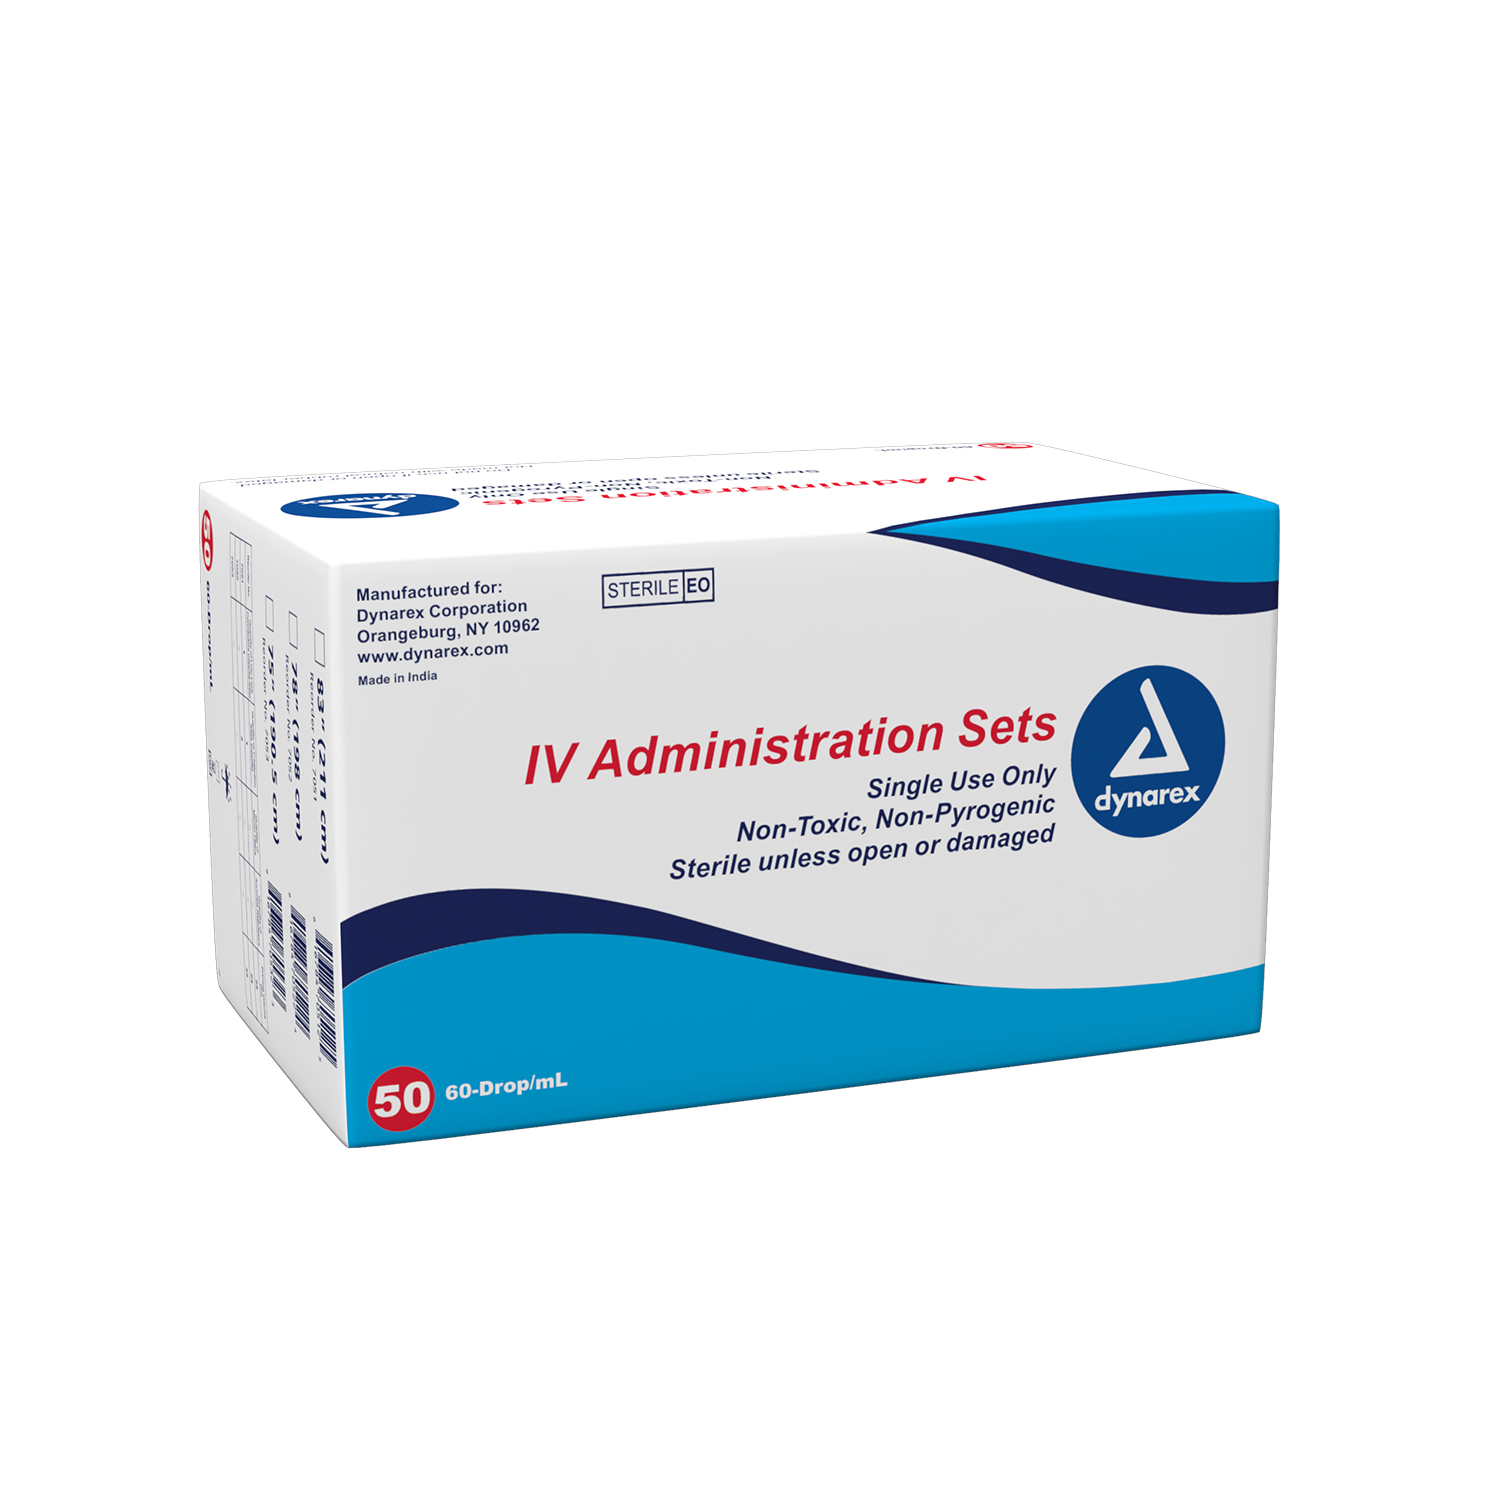 IV Administration set - 60 Drop, 75